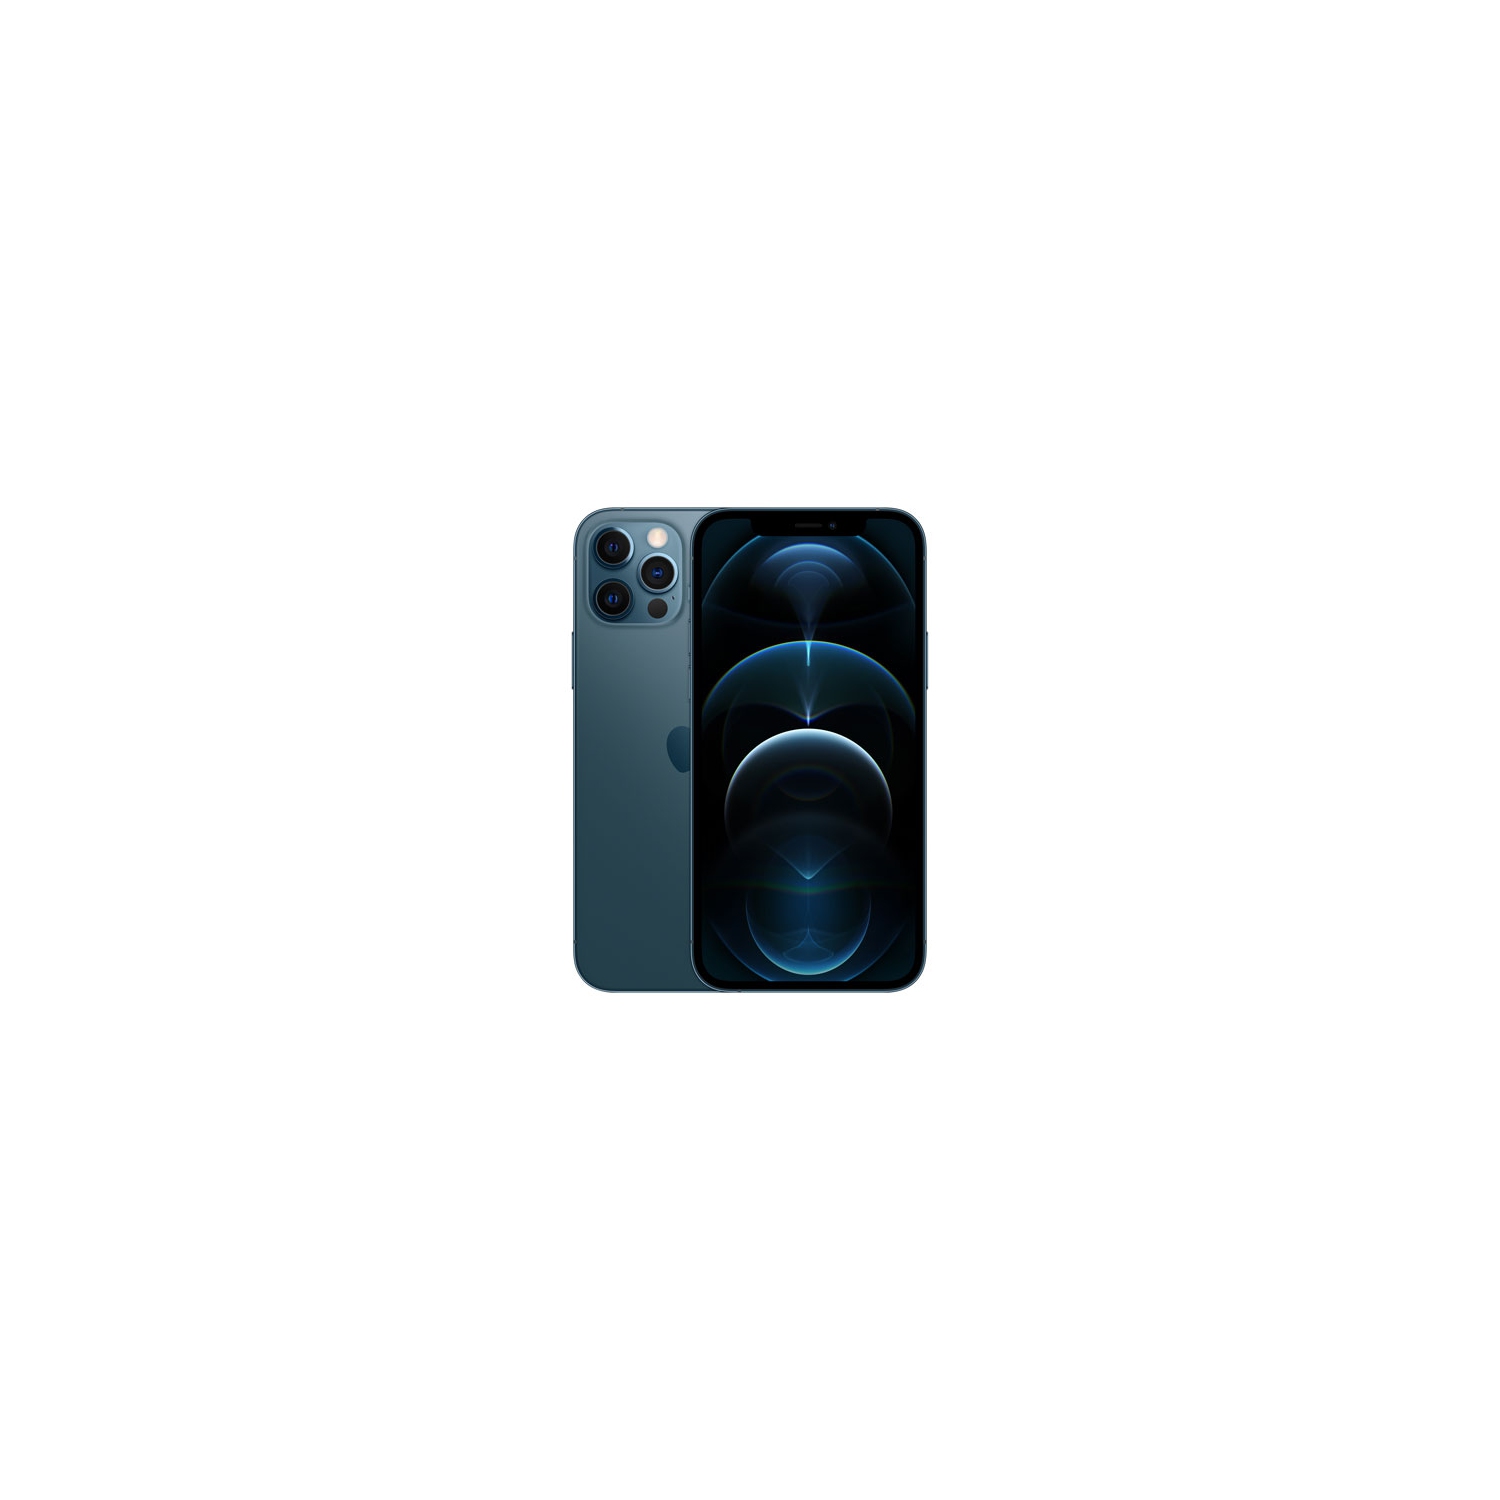 Apple iPhone 12 Pro 128GB Smartphone - Pacific Blue - Unlocked - Open Box